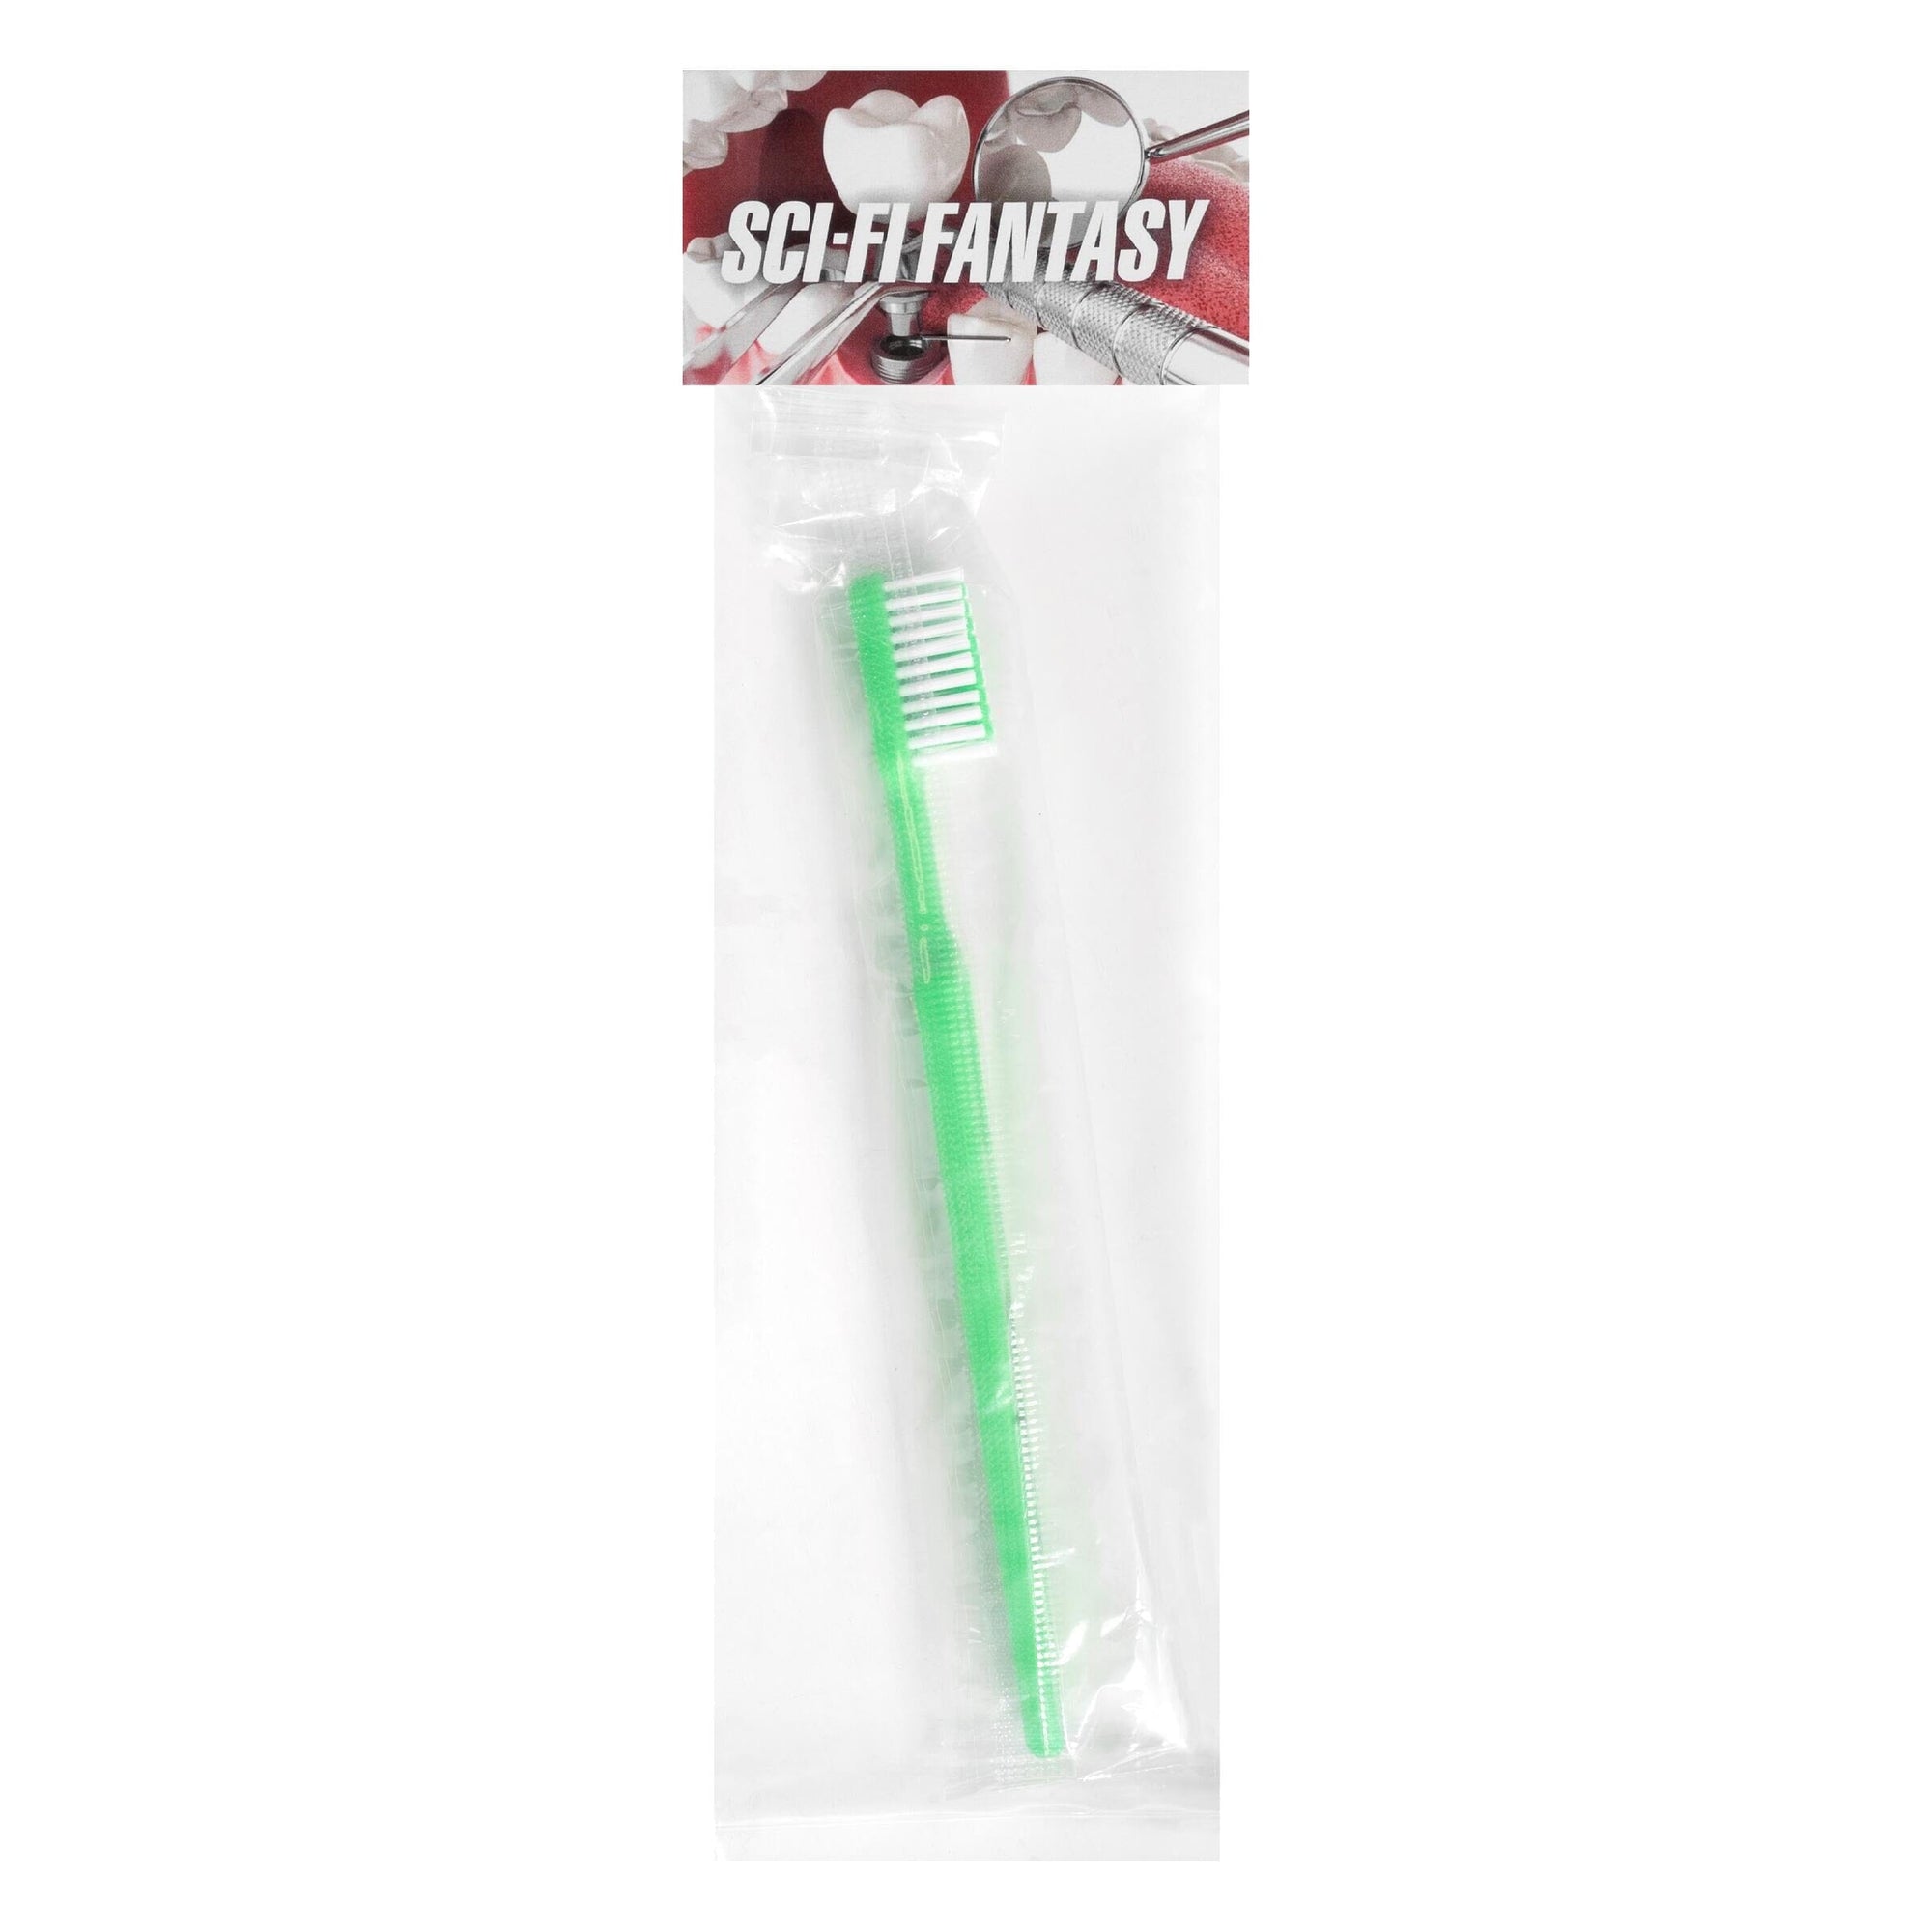 Sci Fi Fantasy Toothbrush Green accessories Sci-Fi Fantasy 